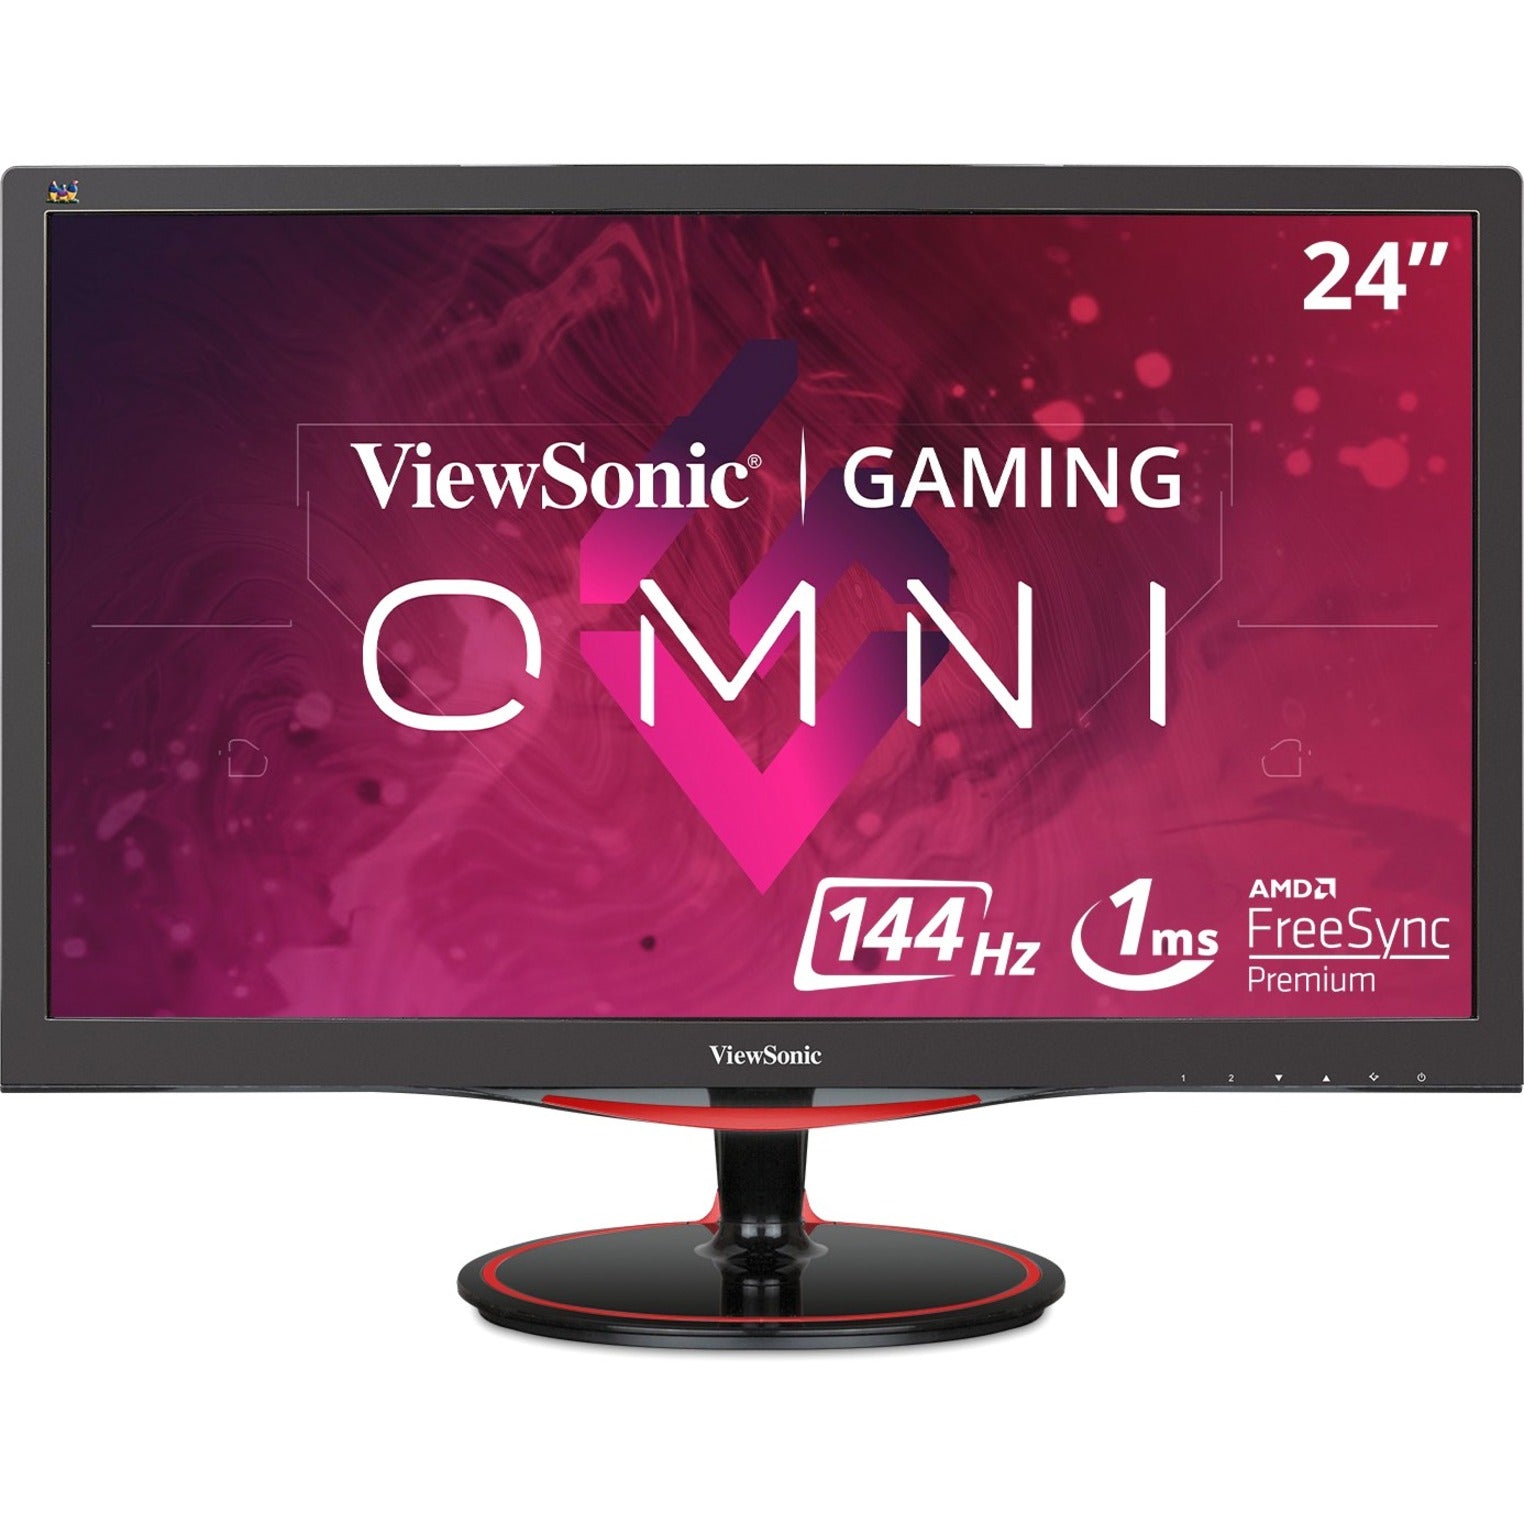 ViewSonic VX2458-MHD Gaming Monitor, 24 Full HD, 144Hz, AMD FreeSync, Black Red